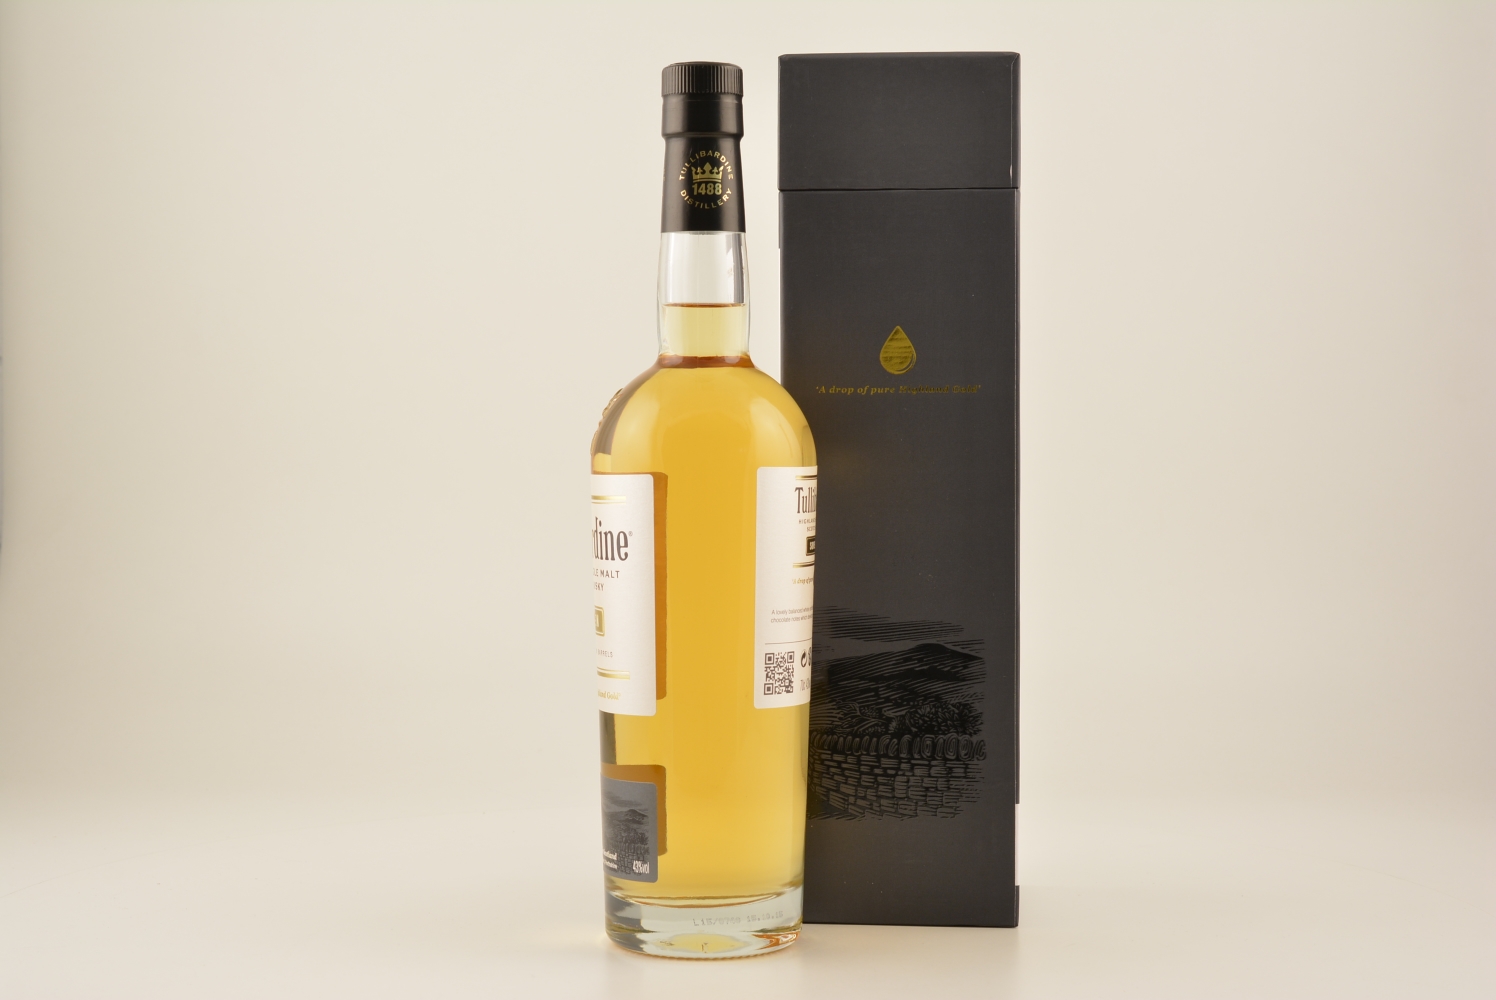 Tullibardine Sovereign Highland Single Malt Scotch Whisky 43% 0,7l